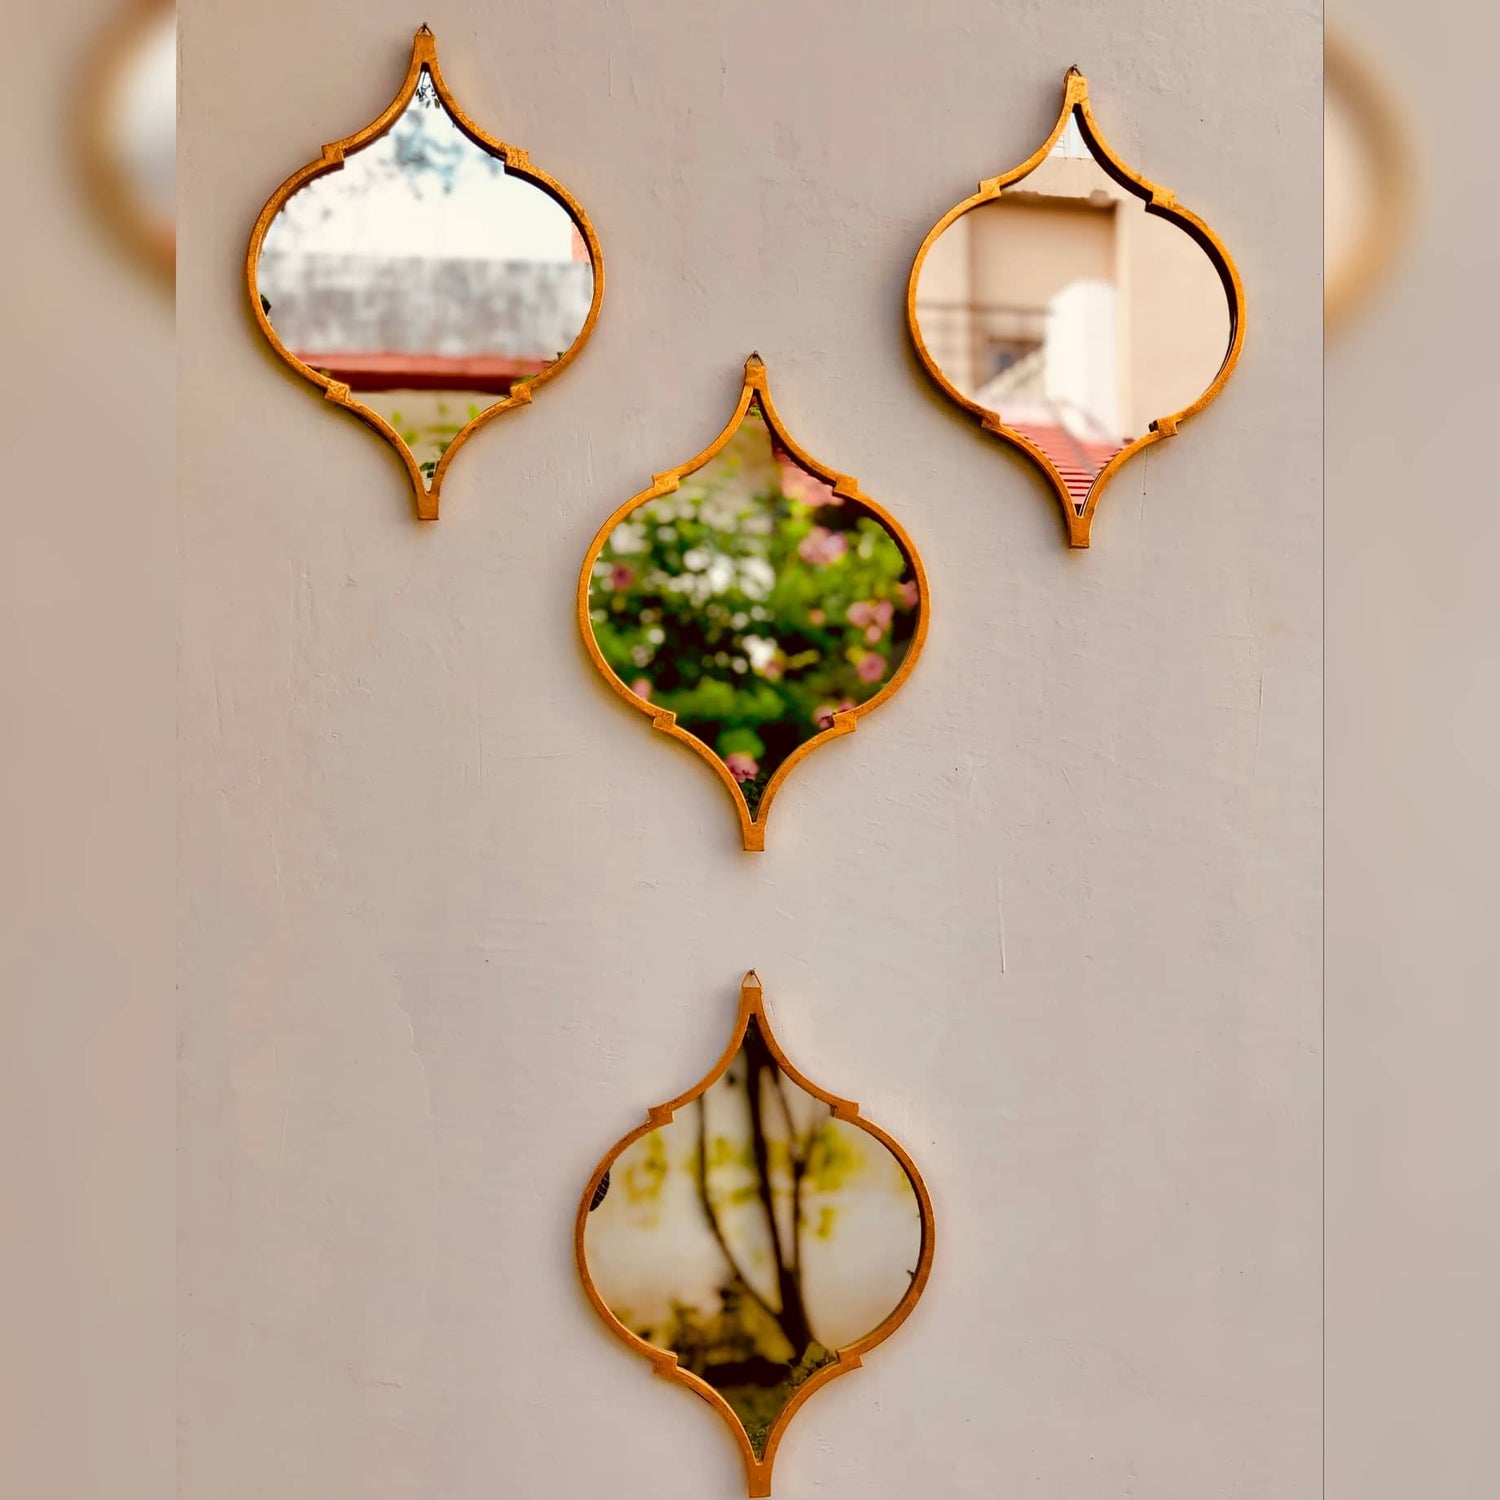 Decorative Wall Mirror | Mirror Decoration on wall